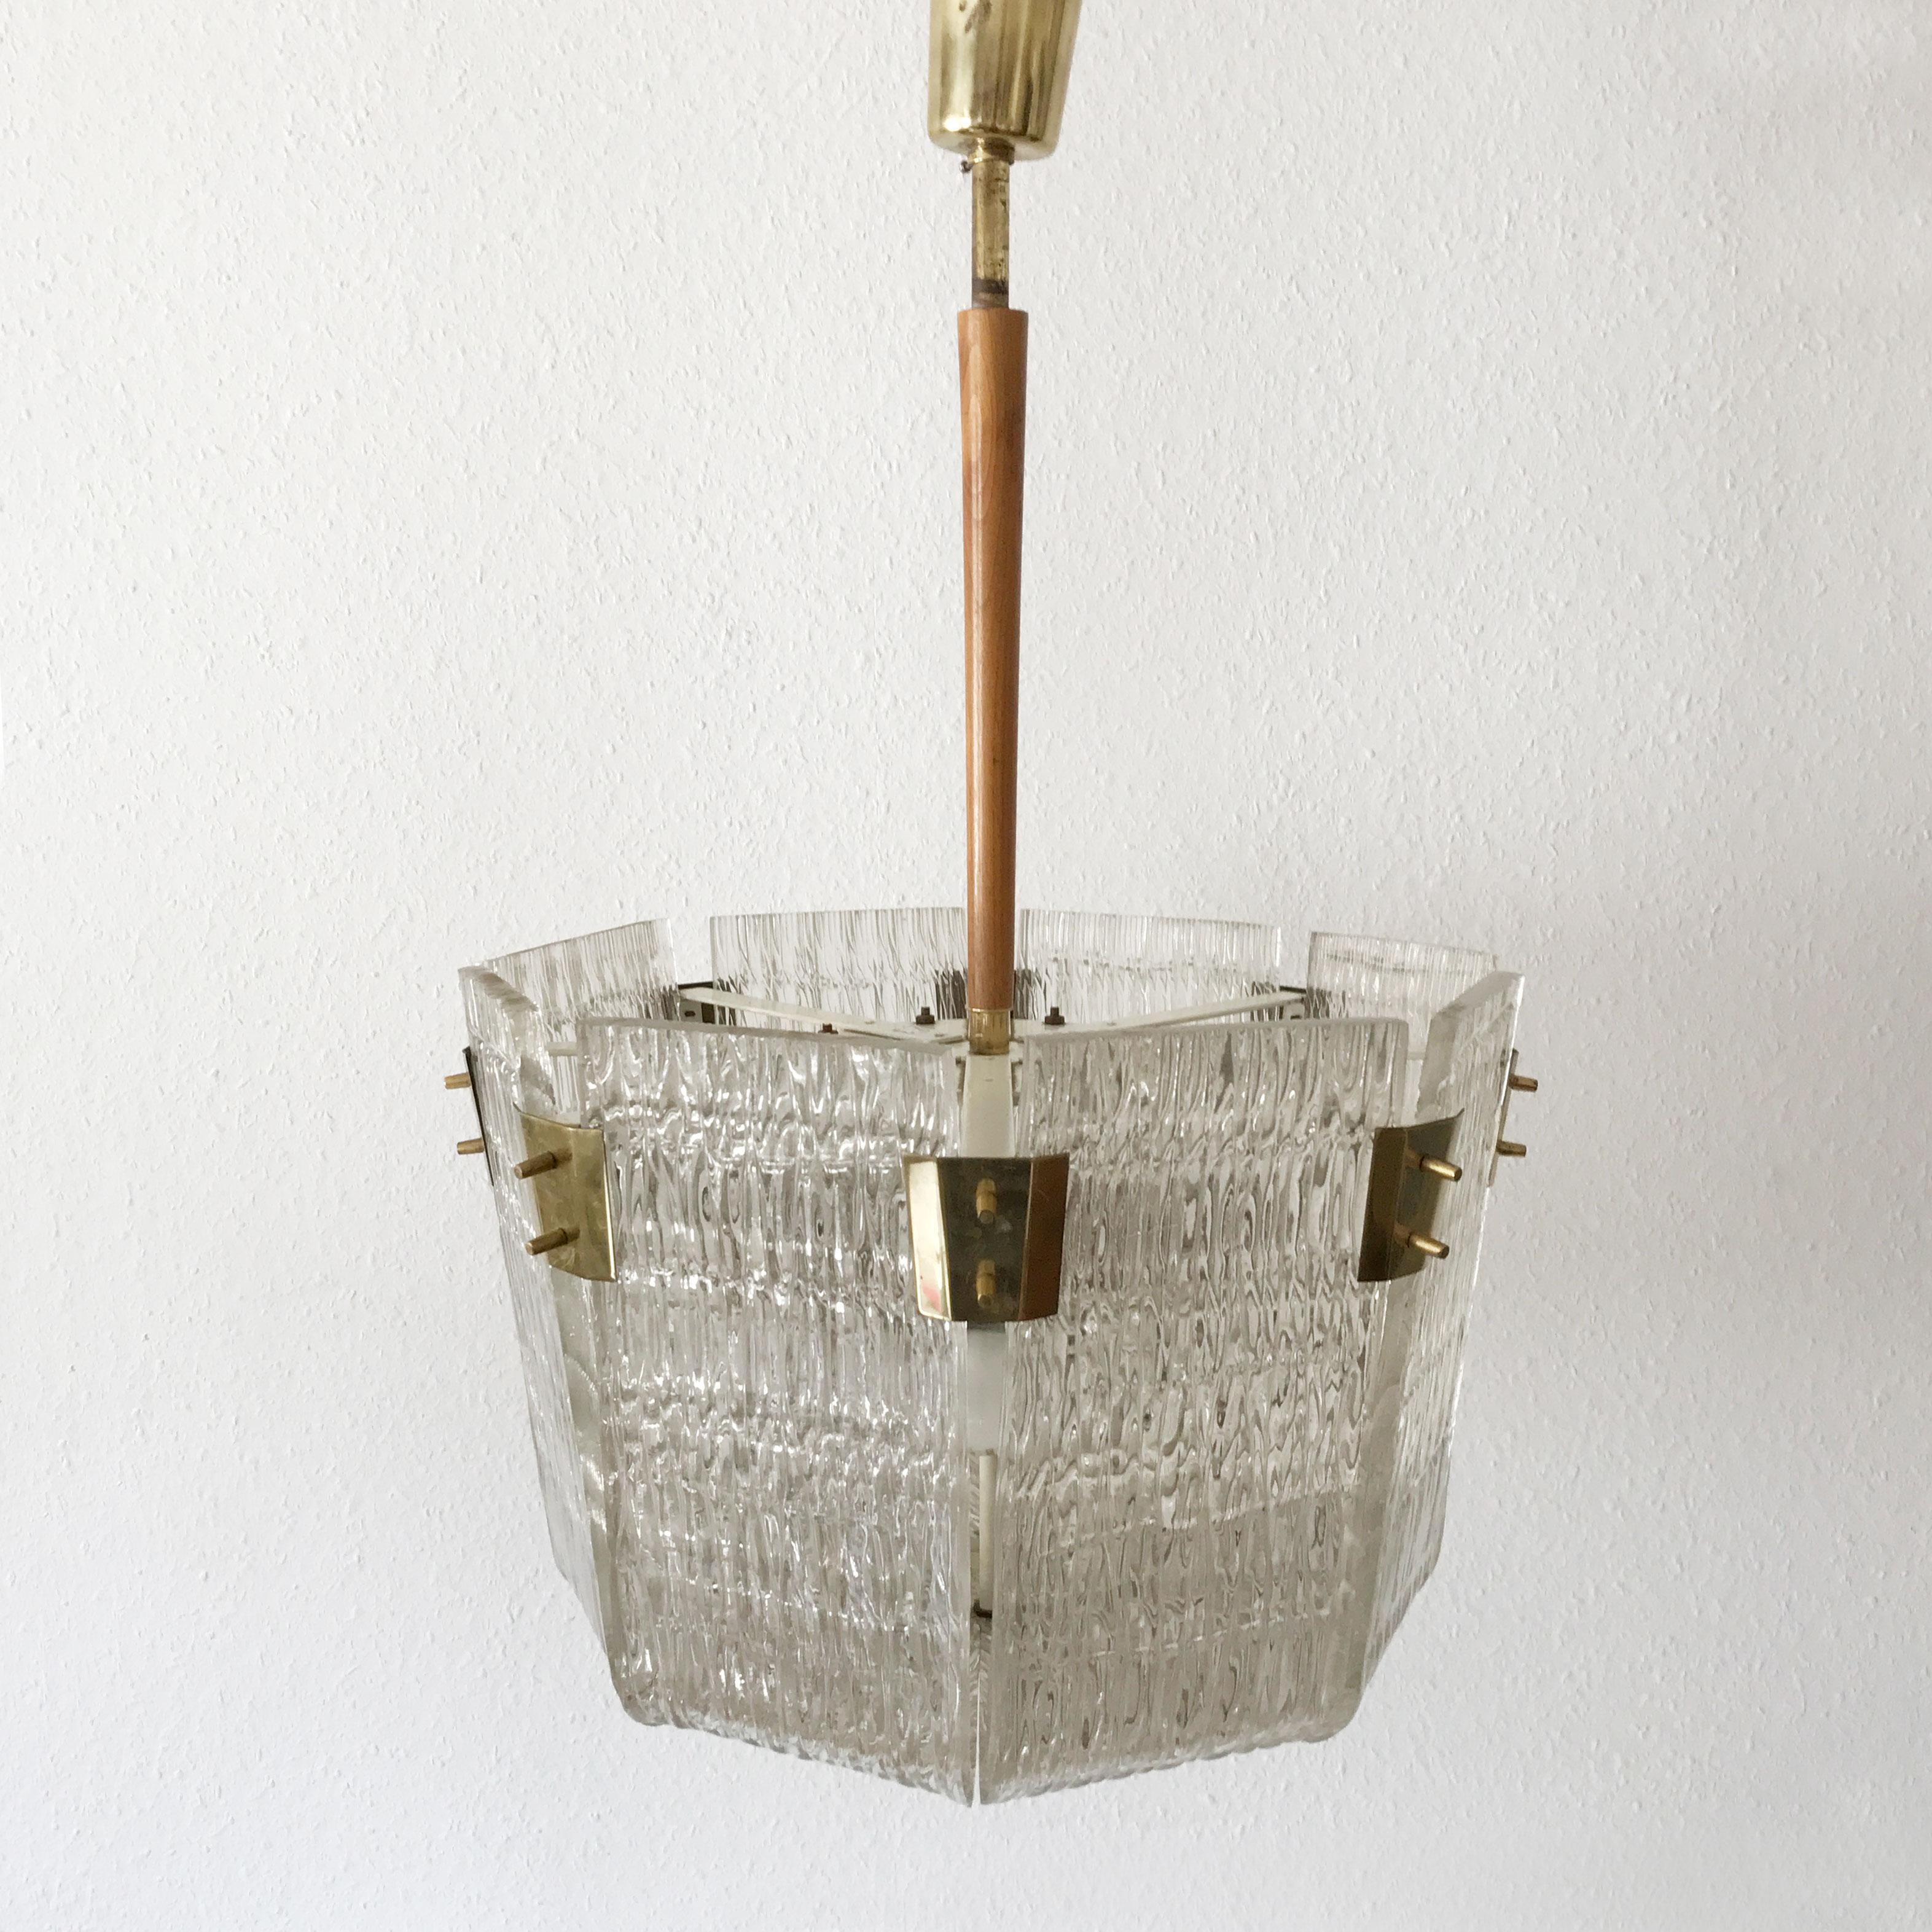 Monumental Midcentury Basket Chandelier or Pendant Lamp by J.T. Kalmar, 1950s For Sale 2